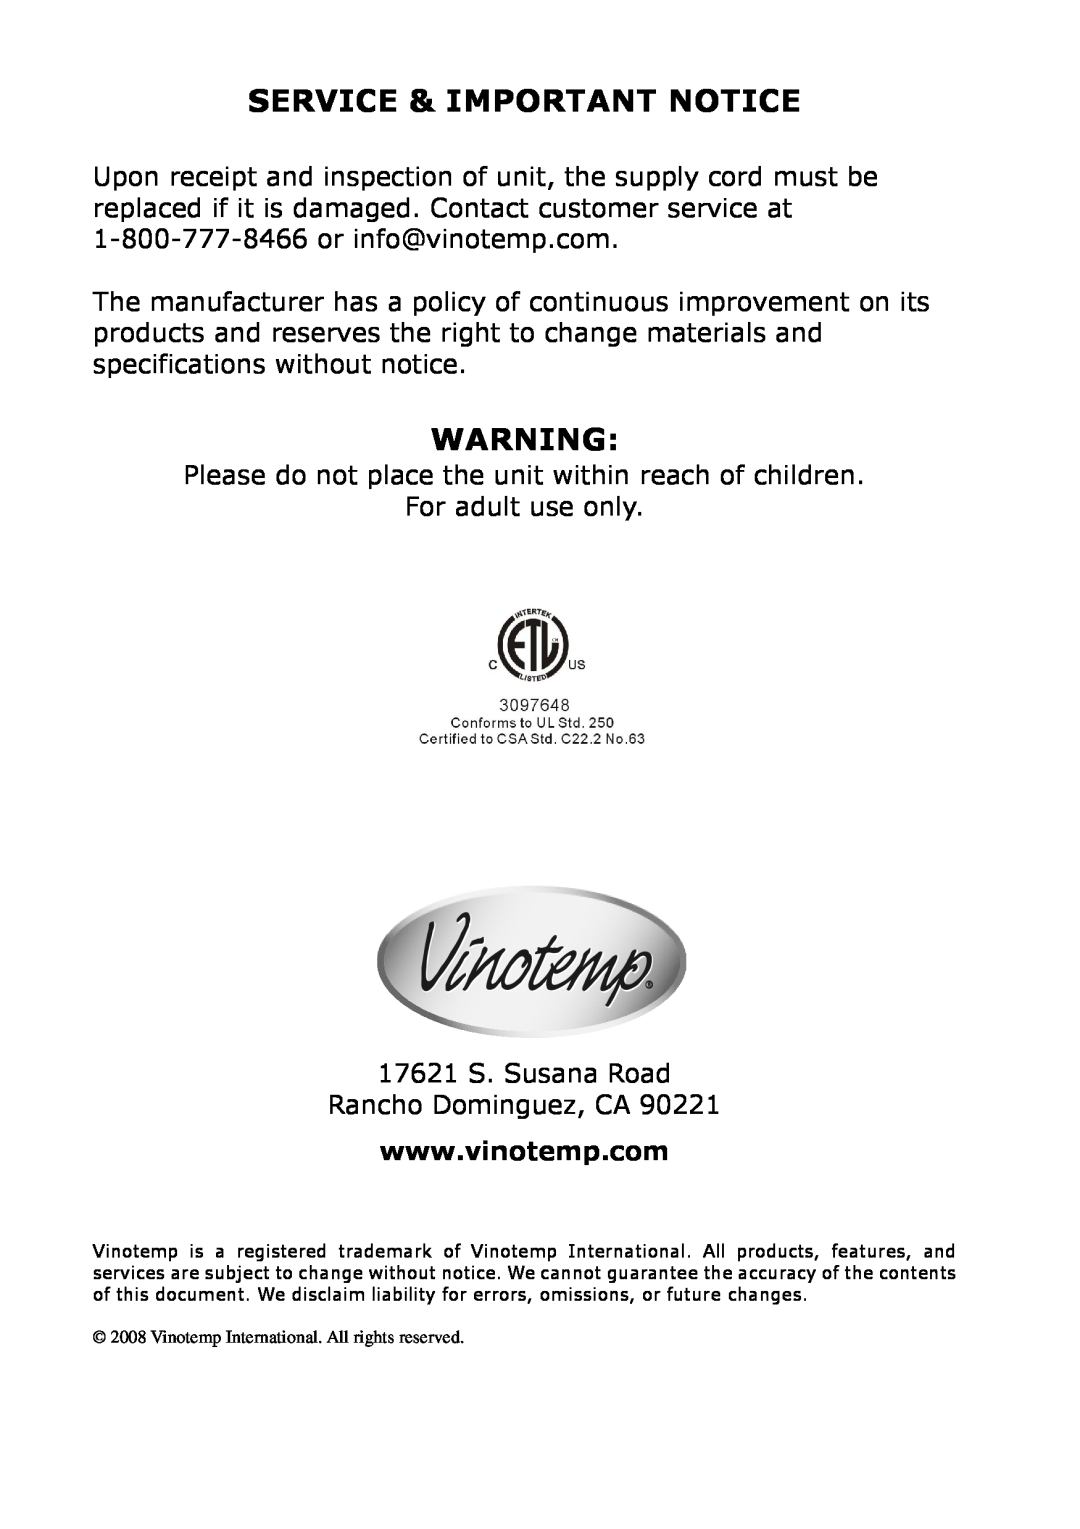 Vinotemp VT-6TEDS owner manual Service & Important Notice 